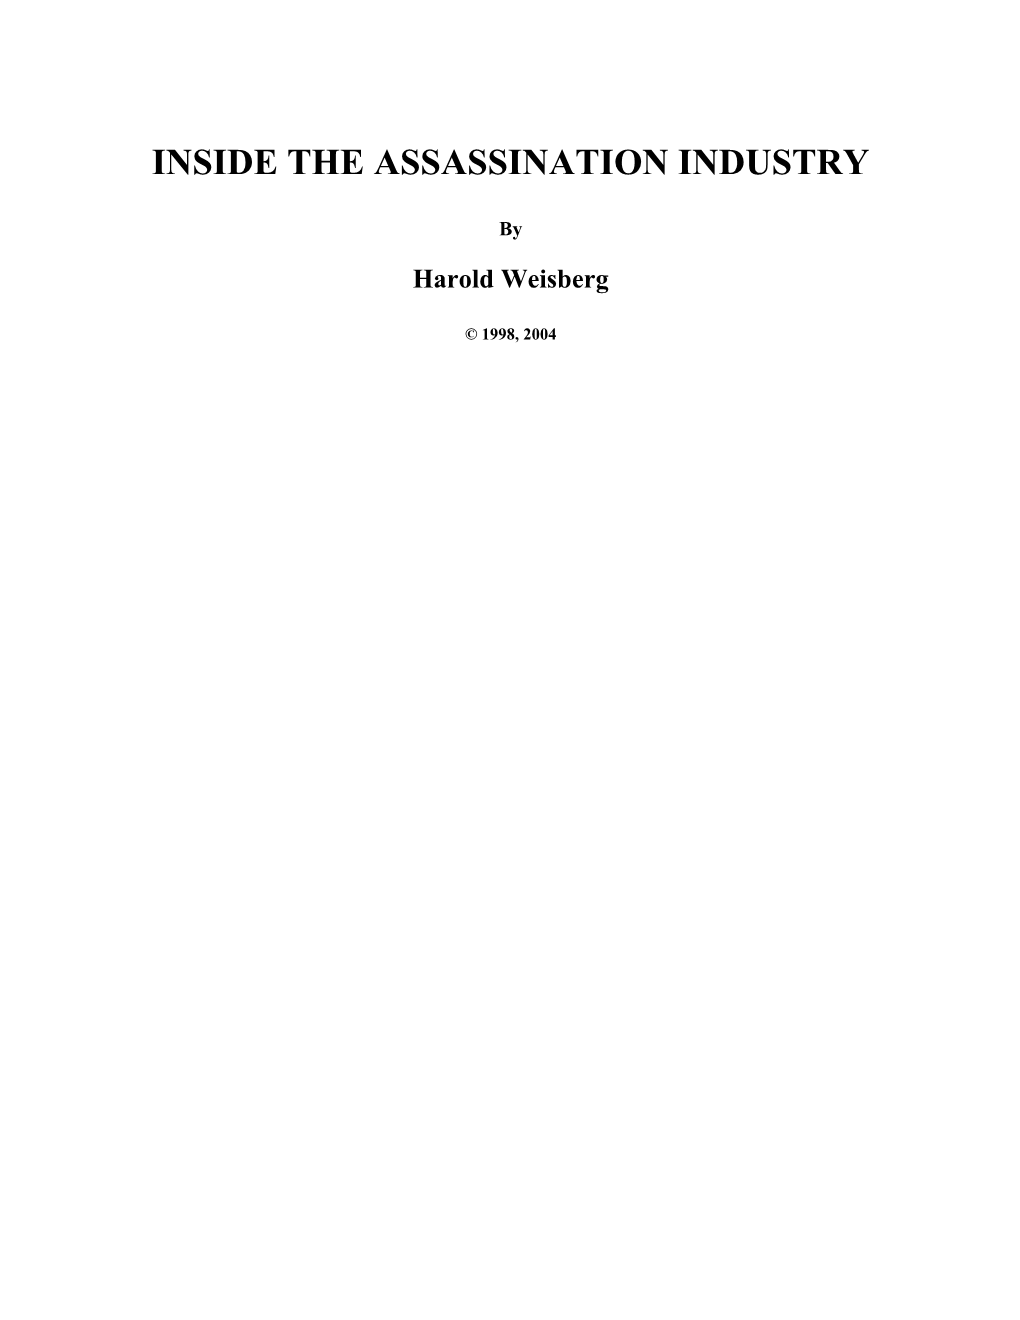 Inside the Assassination Industry